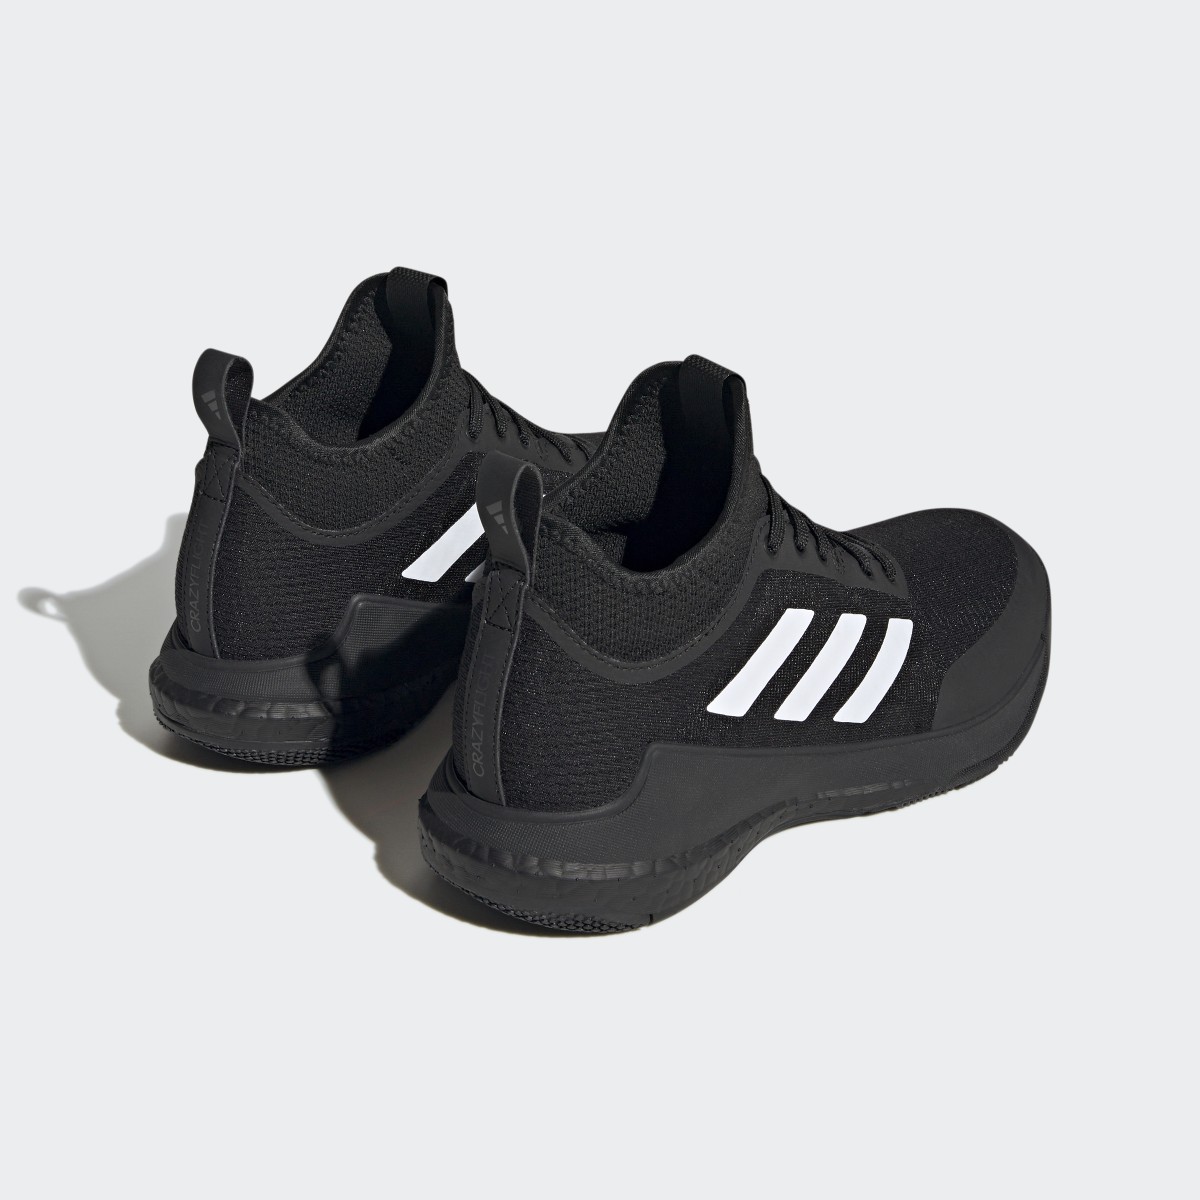 Adidas Crazyflight Mid Shoes. 6